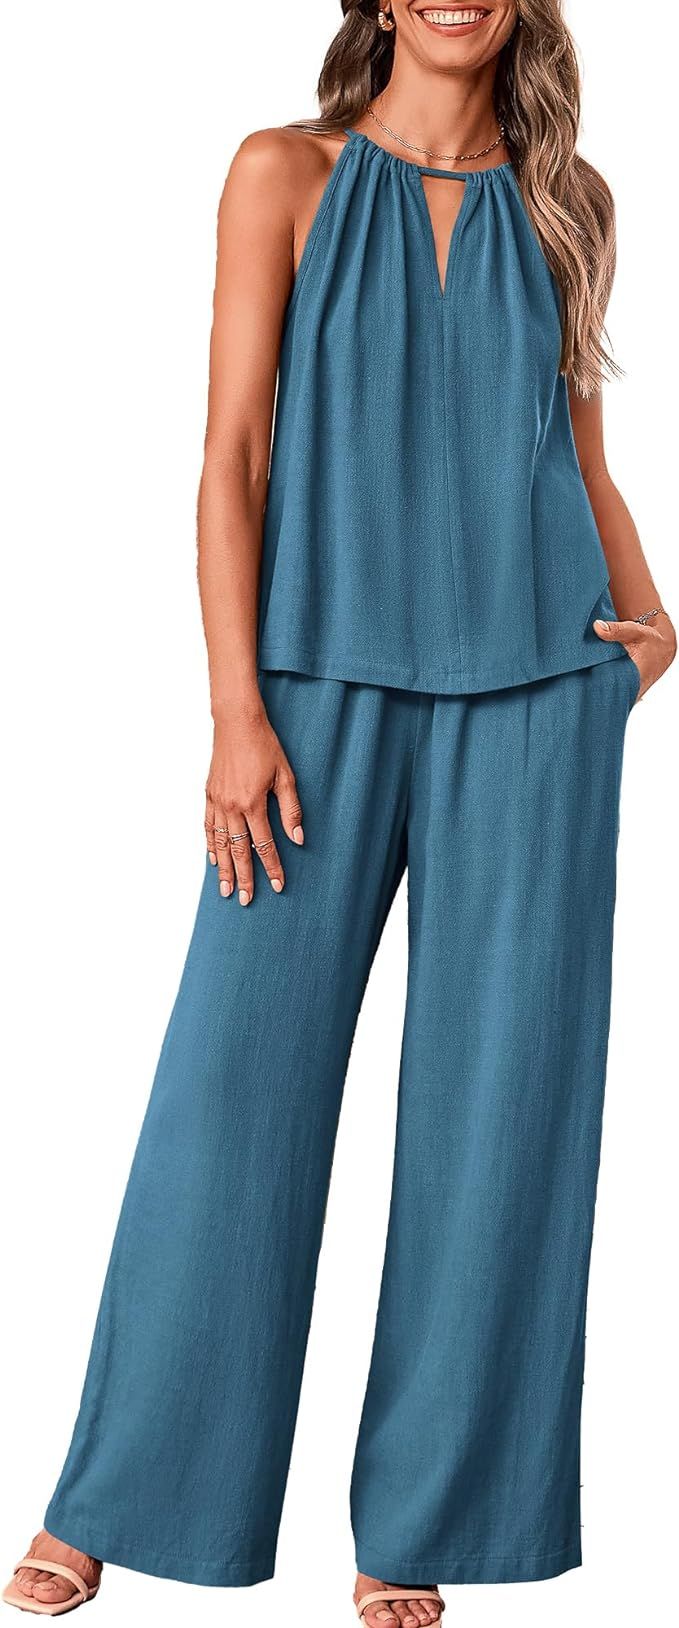 BTFBM Women's Casual Summer Two Piece Outfits Cotton Linen Sets Cutout Halter Sleeveless Top Wide... | Amazon (US)